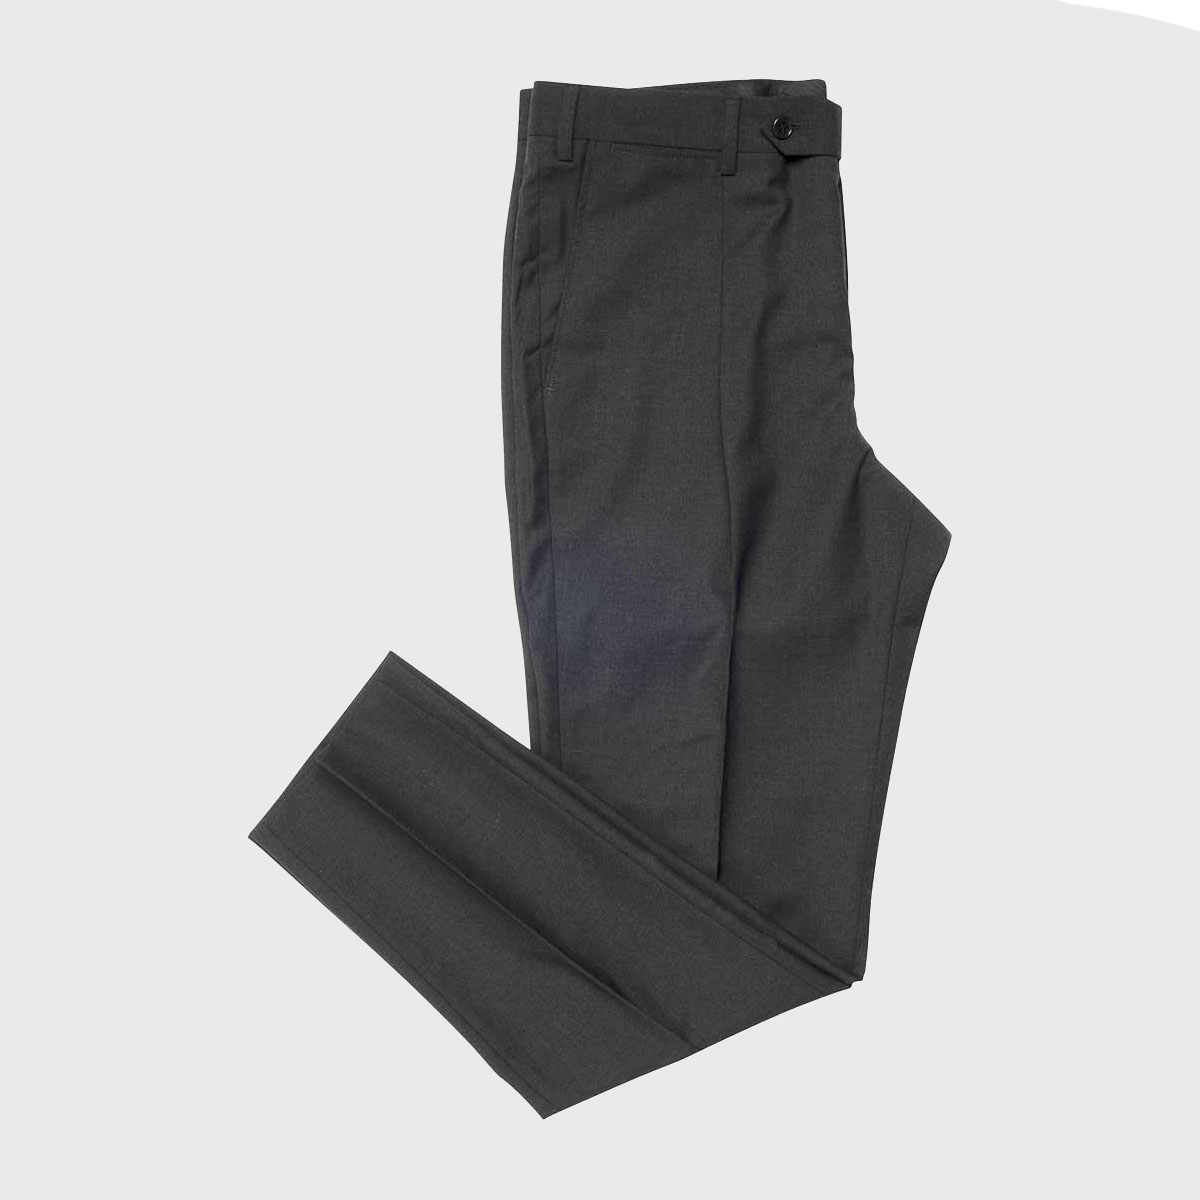 1 Pleat Super 100’s Wool Trousers in Dark Gray Sartoria Lavore on sale 2022